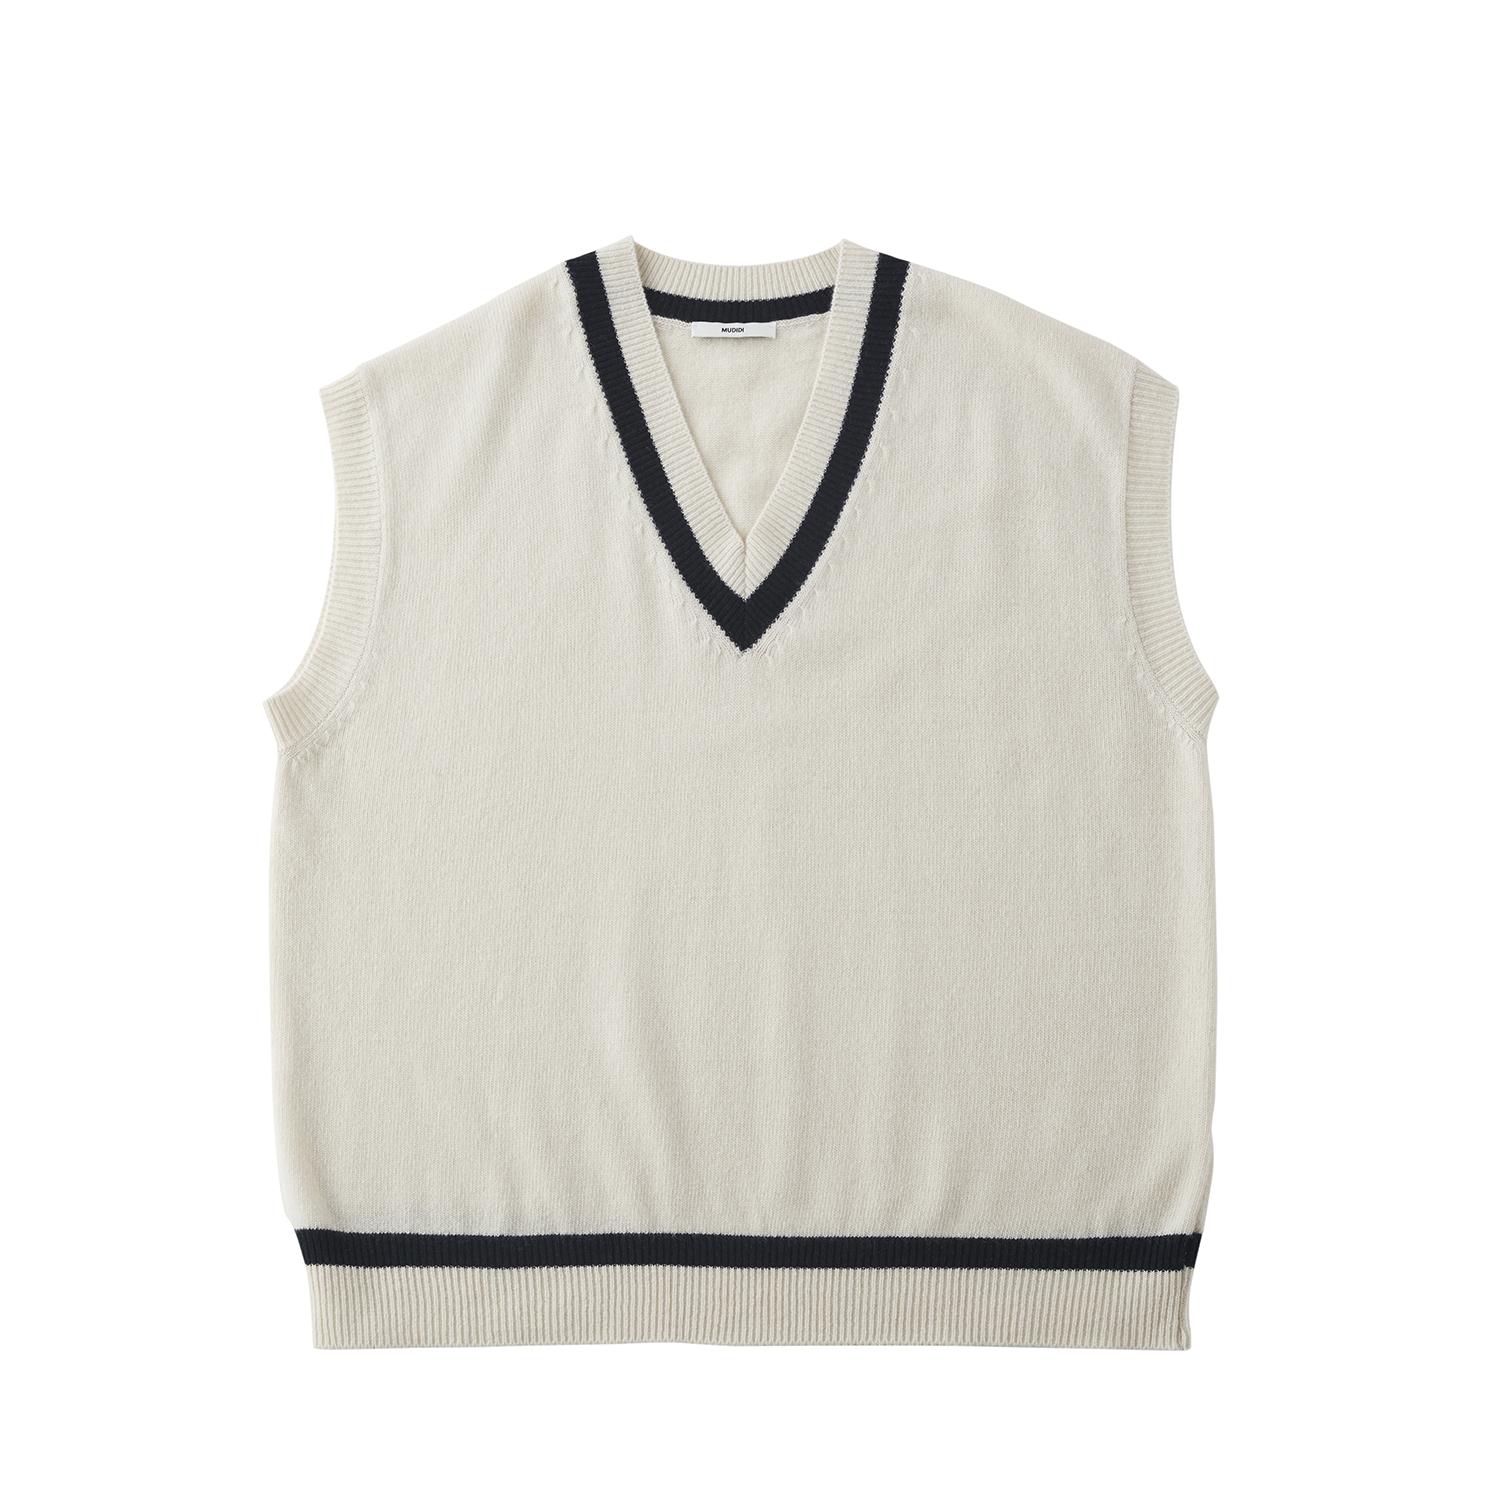 Overfit v-neck knit vest 001 | W Concept